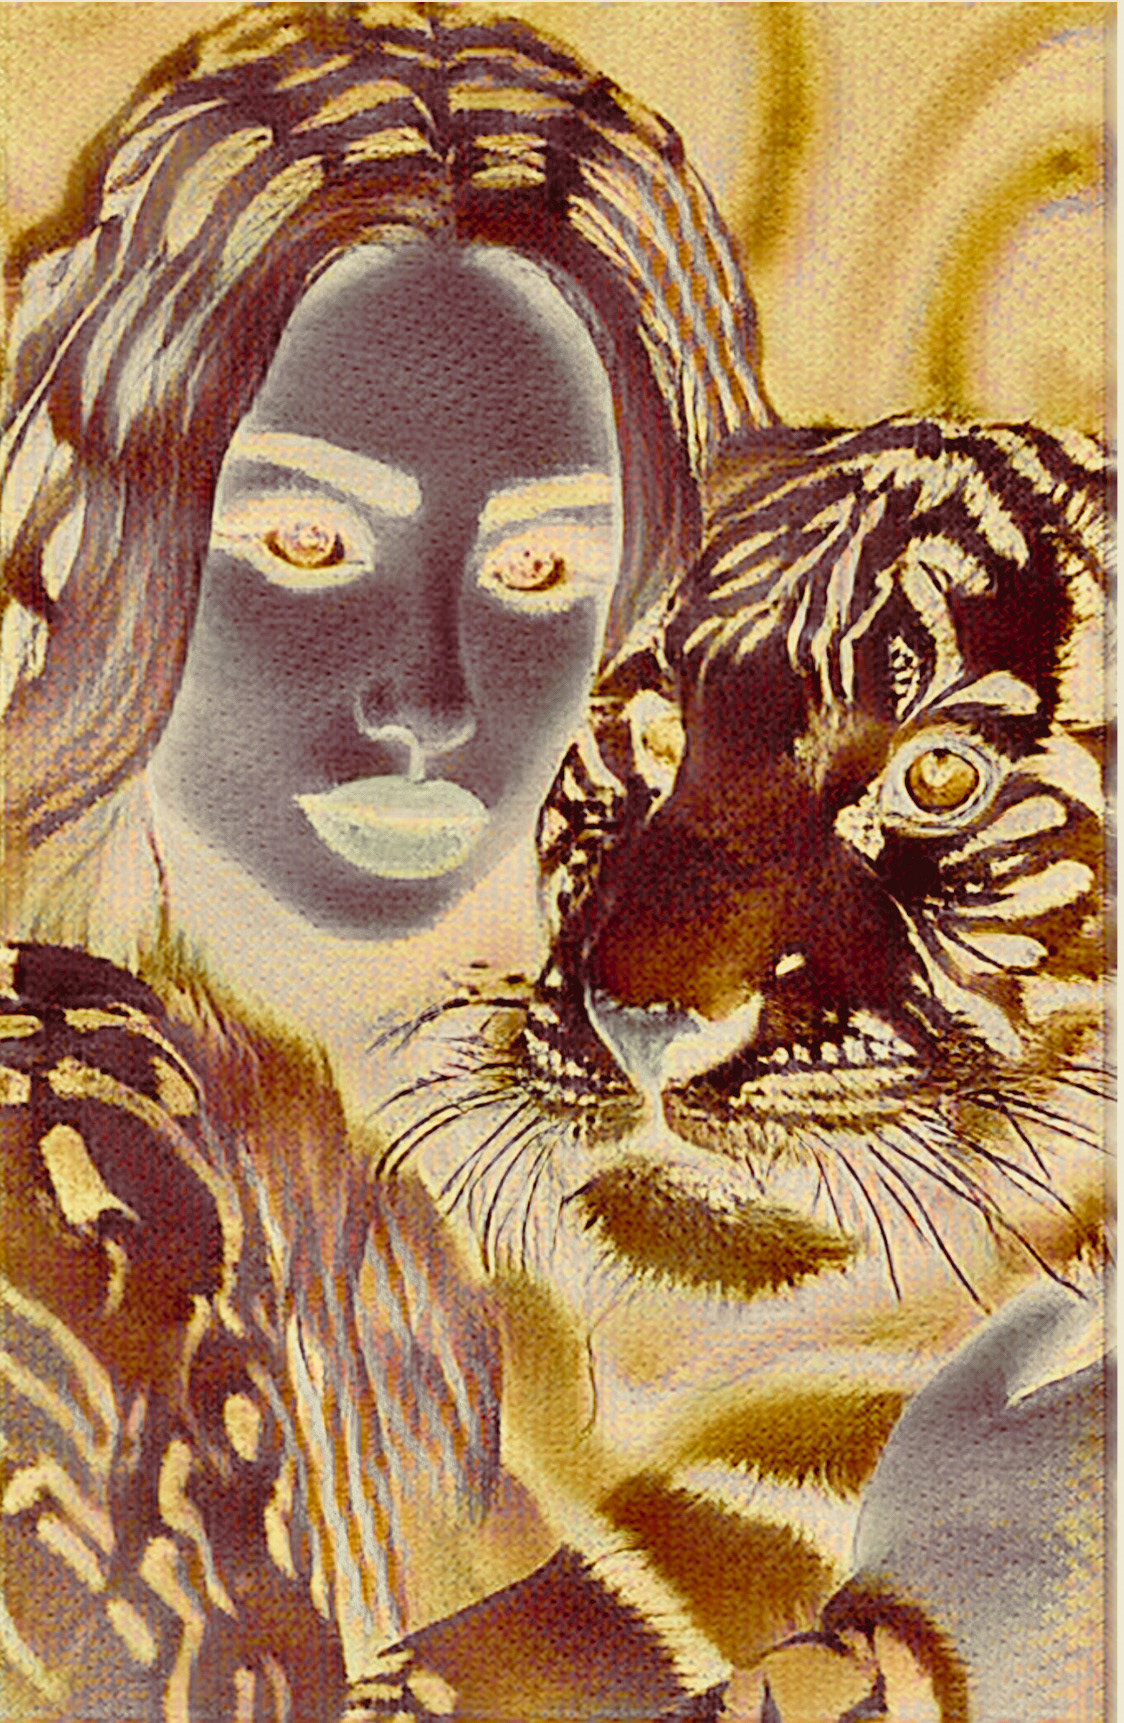 portrait tiger girl sketch ILLUSTRATION  hand drawing painting pencils handmade graphic design  eyes